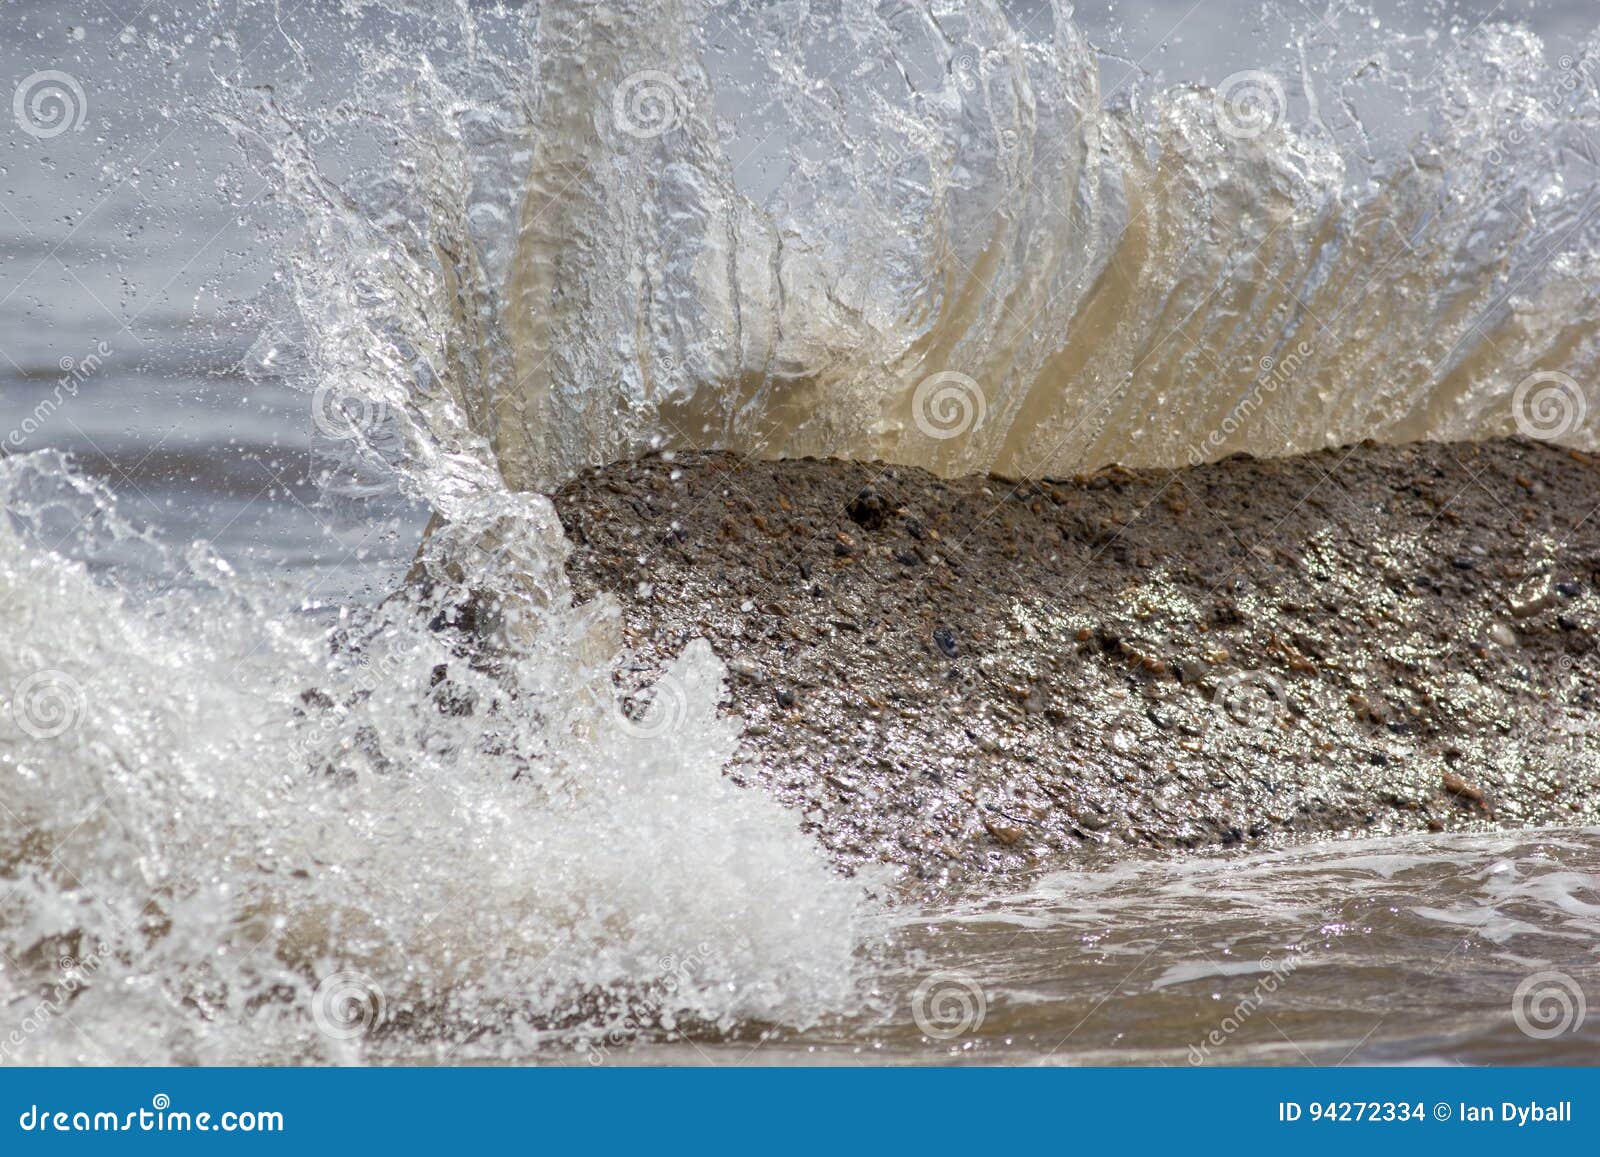 force of nature. splashing wave energy. splash as sea water hits